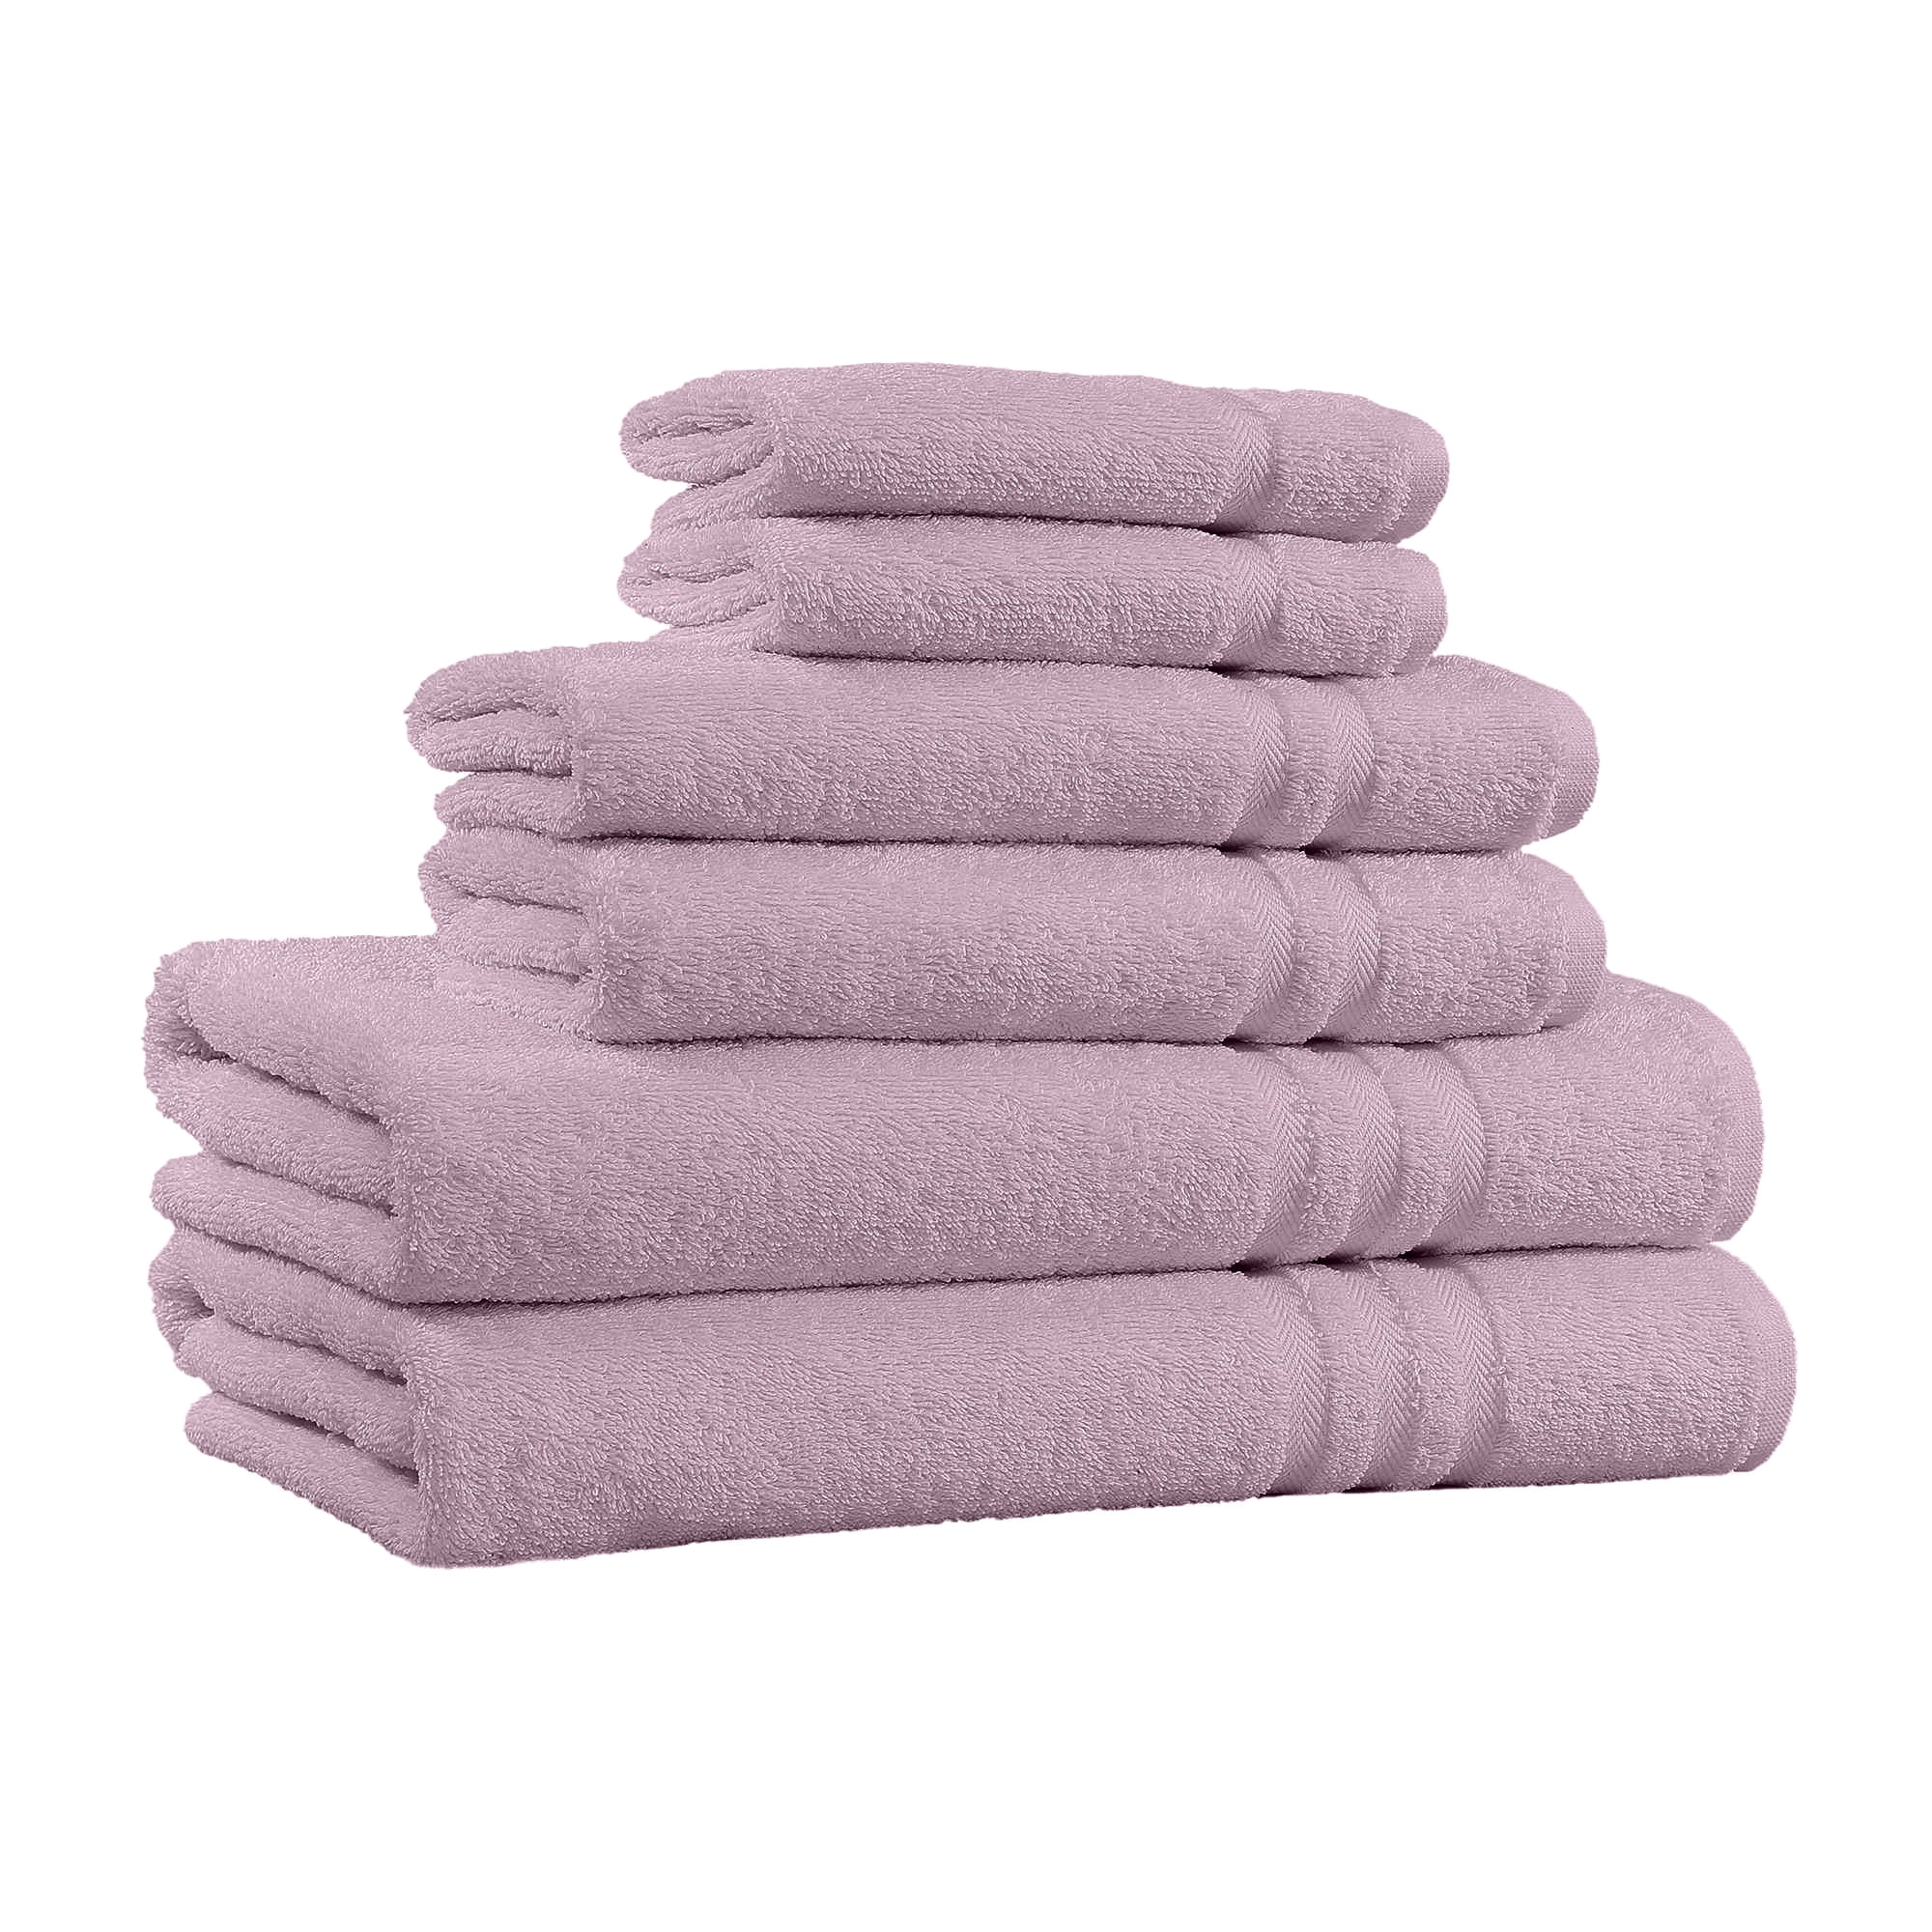 Kassatex Kassadesign Brights 100% 625 GSM Cotton 6pc Bath Towel Set 11 Colors 